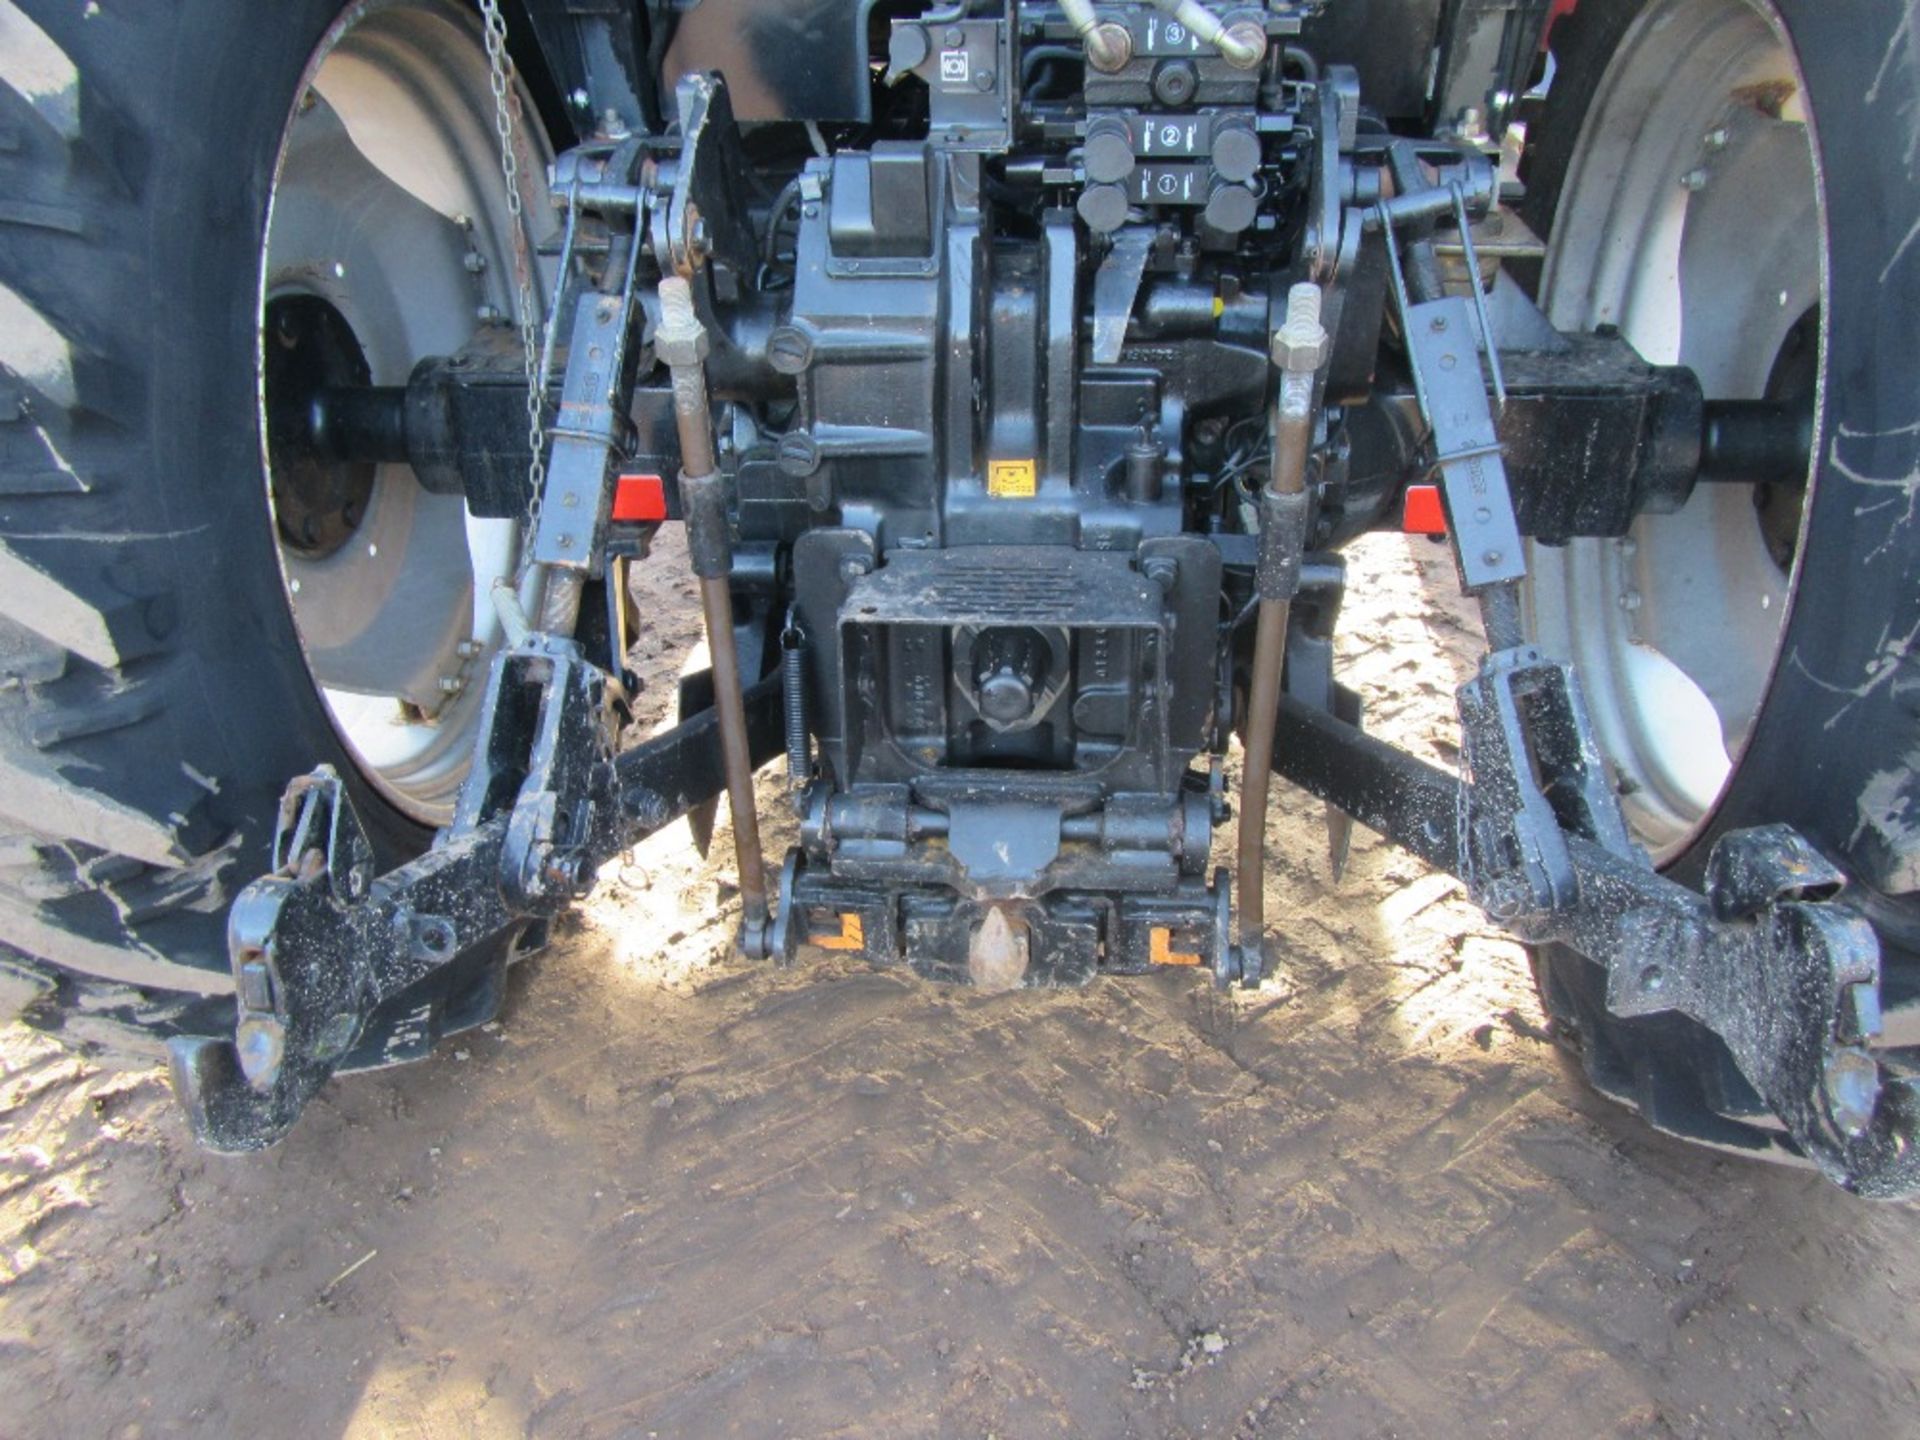 Case International MX90 Tractor c/w Quicke 760 Loader Reg No T367 OKW - Image 7 of 16